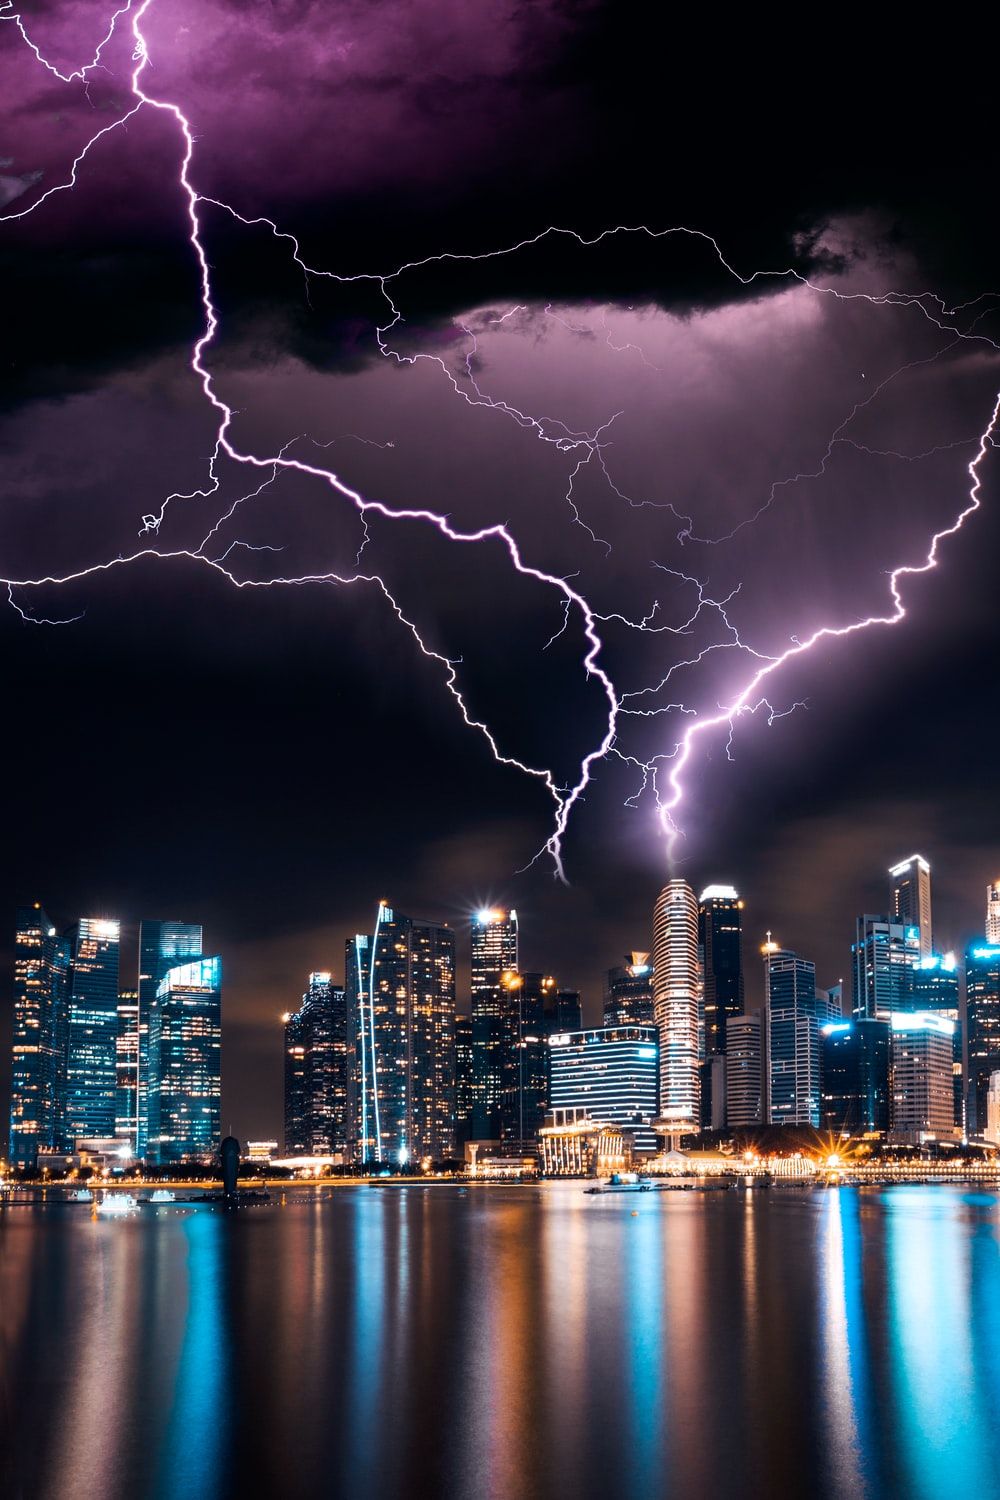 Lightning over the city wallpaper 8260 - Storm